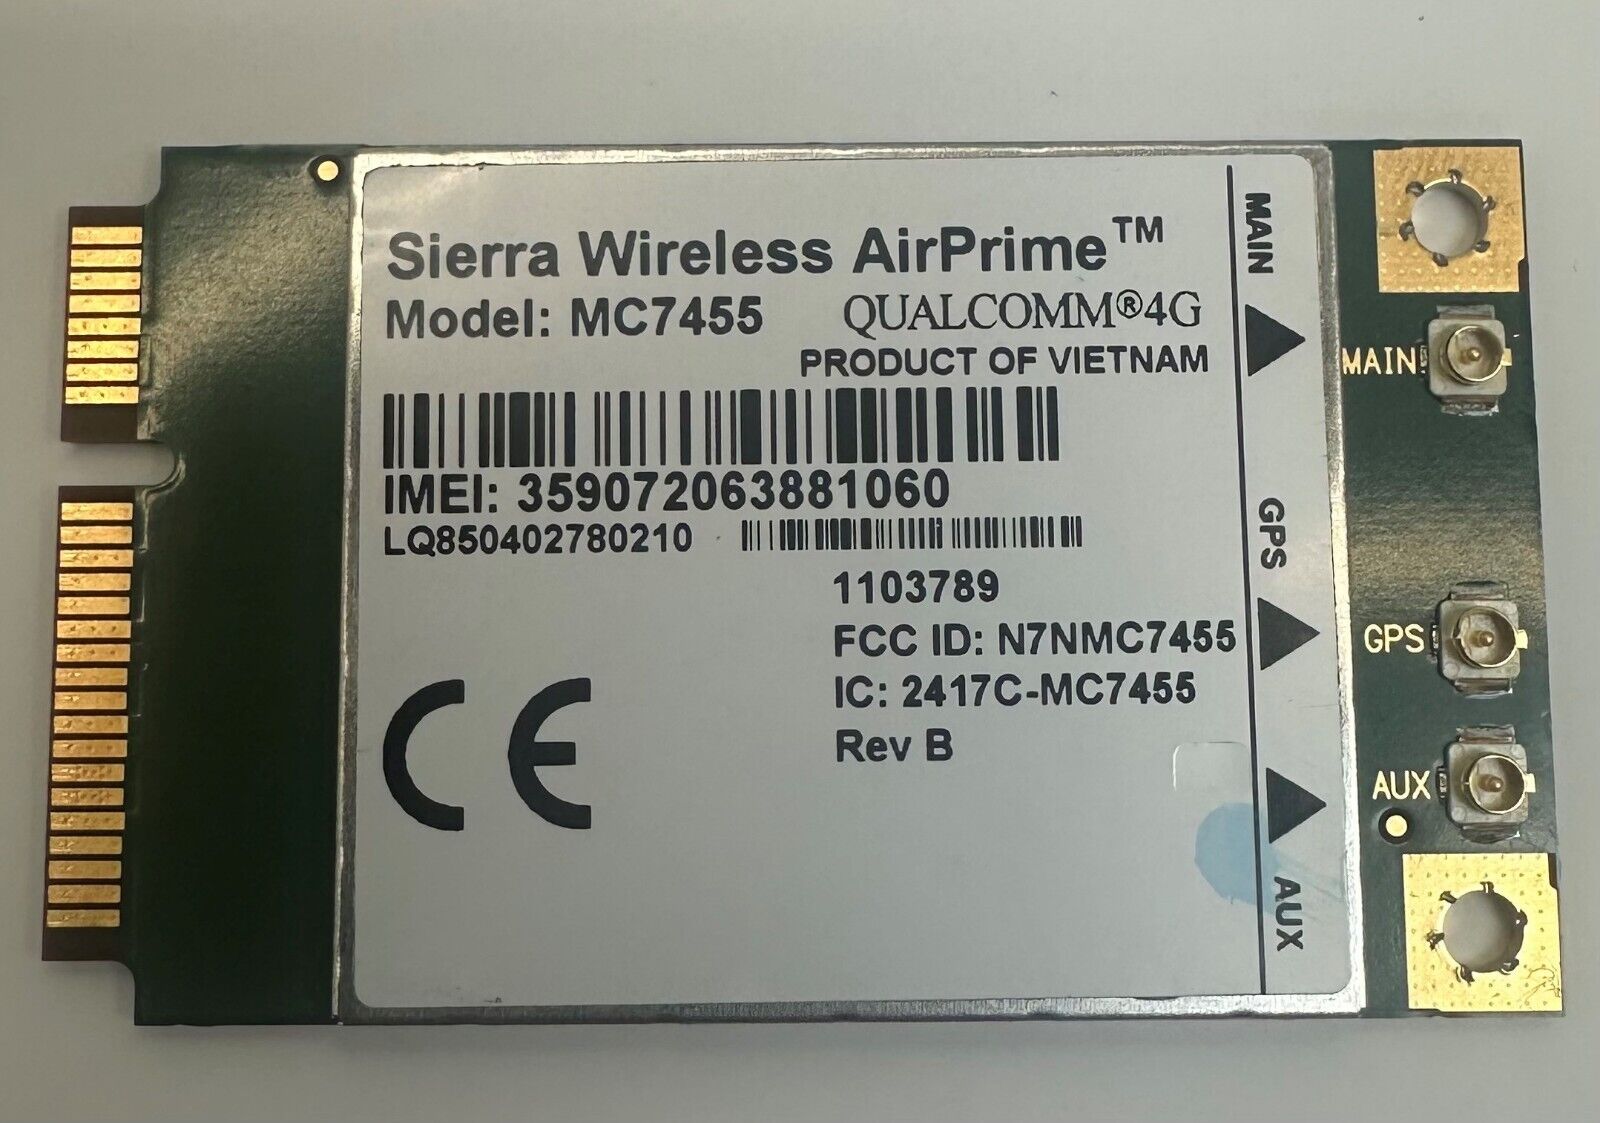 Sierra Wireless AirPrime MC7455 3G 4G LTE/HSPA+ GPS